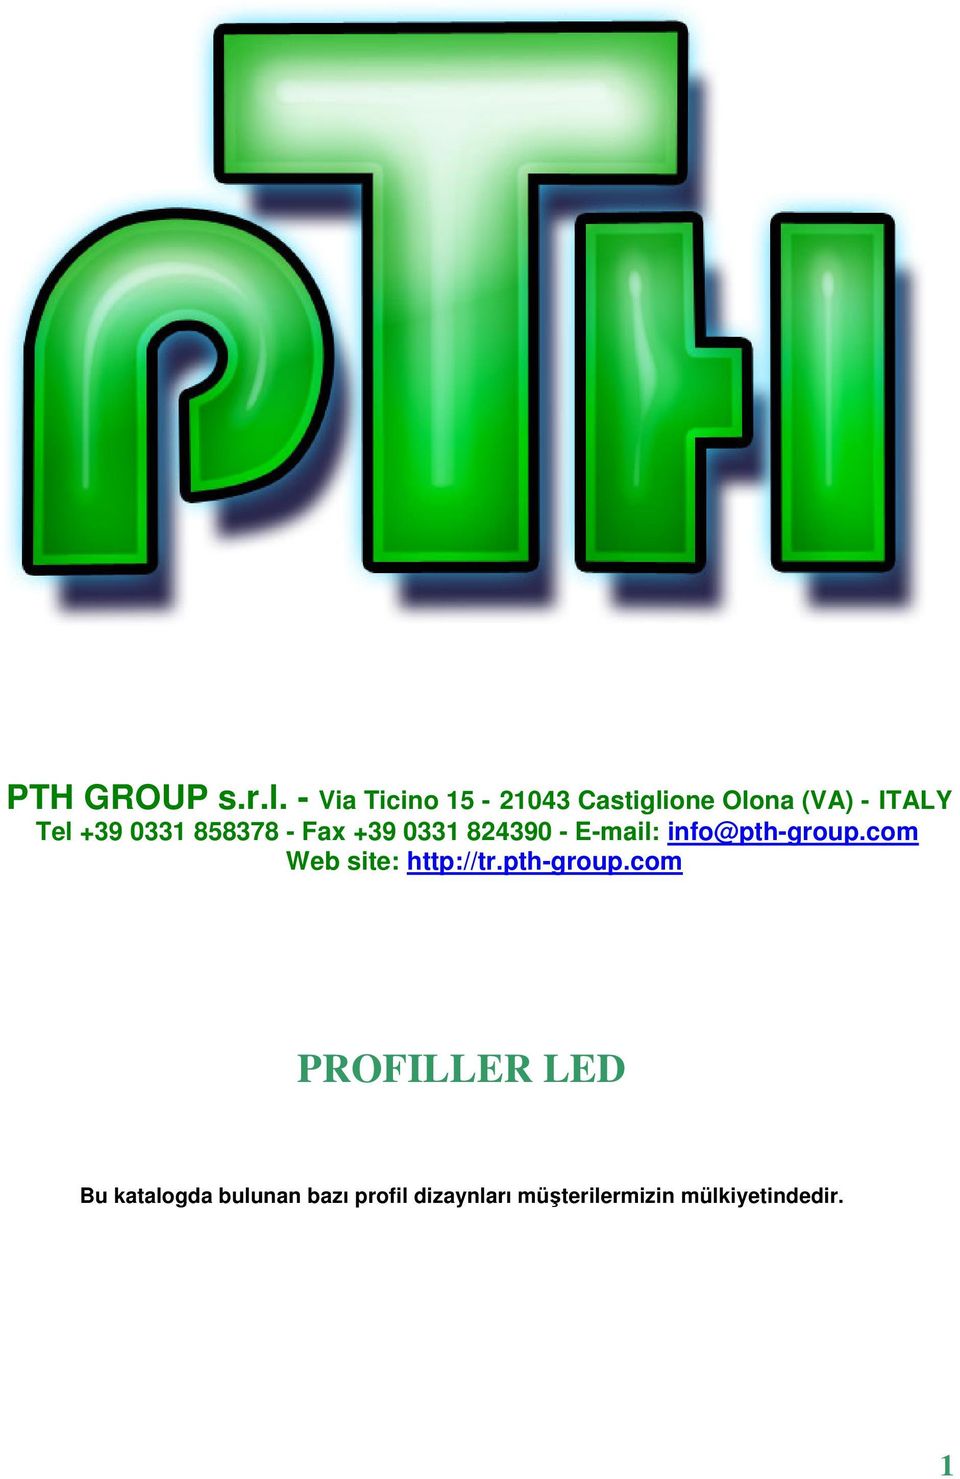 858378 - Fax +39 0331 824390 - E-mail: info@pth-group.